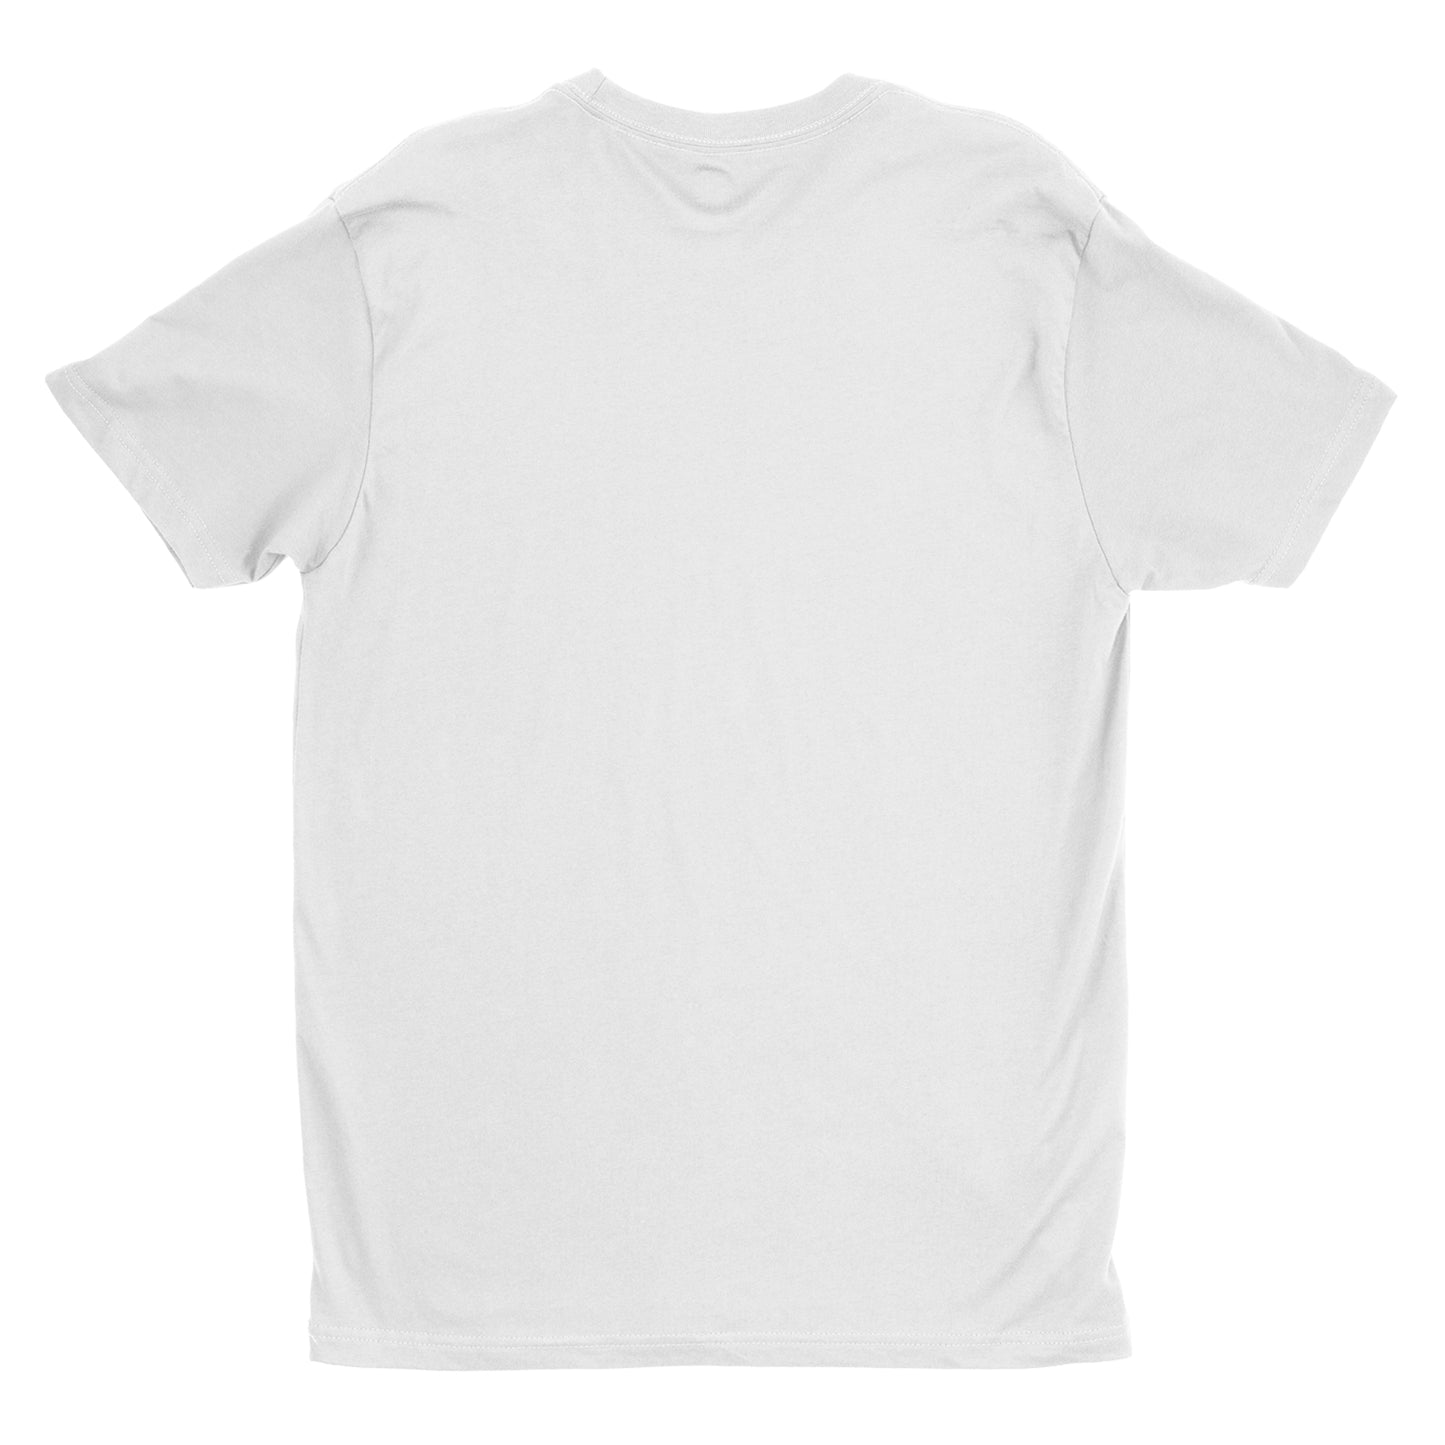 white custom t shirt